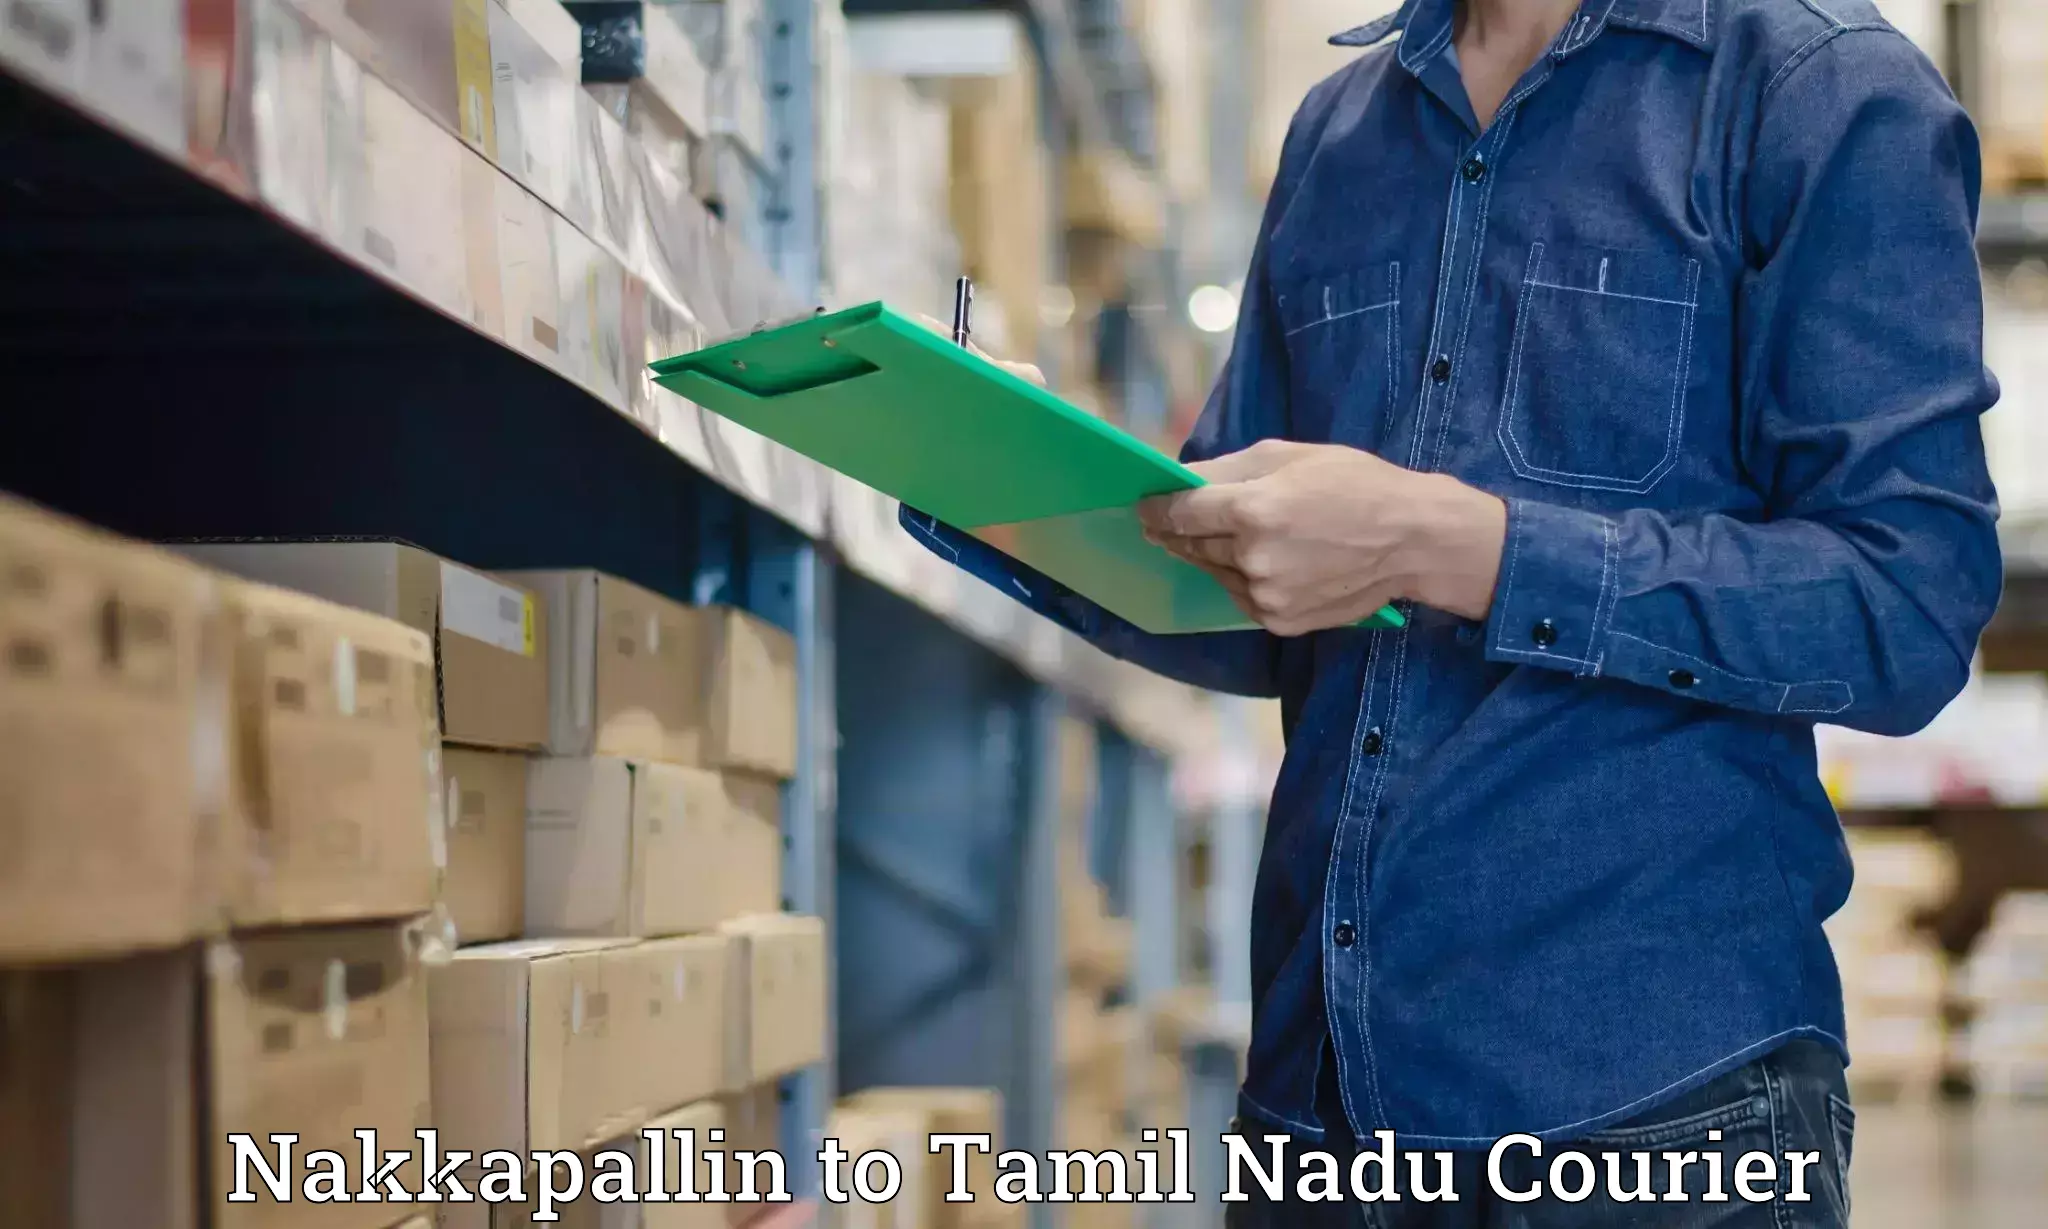 Speedy delivery service Nakkapallin to Tamil Nadu